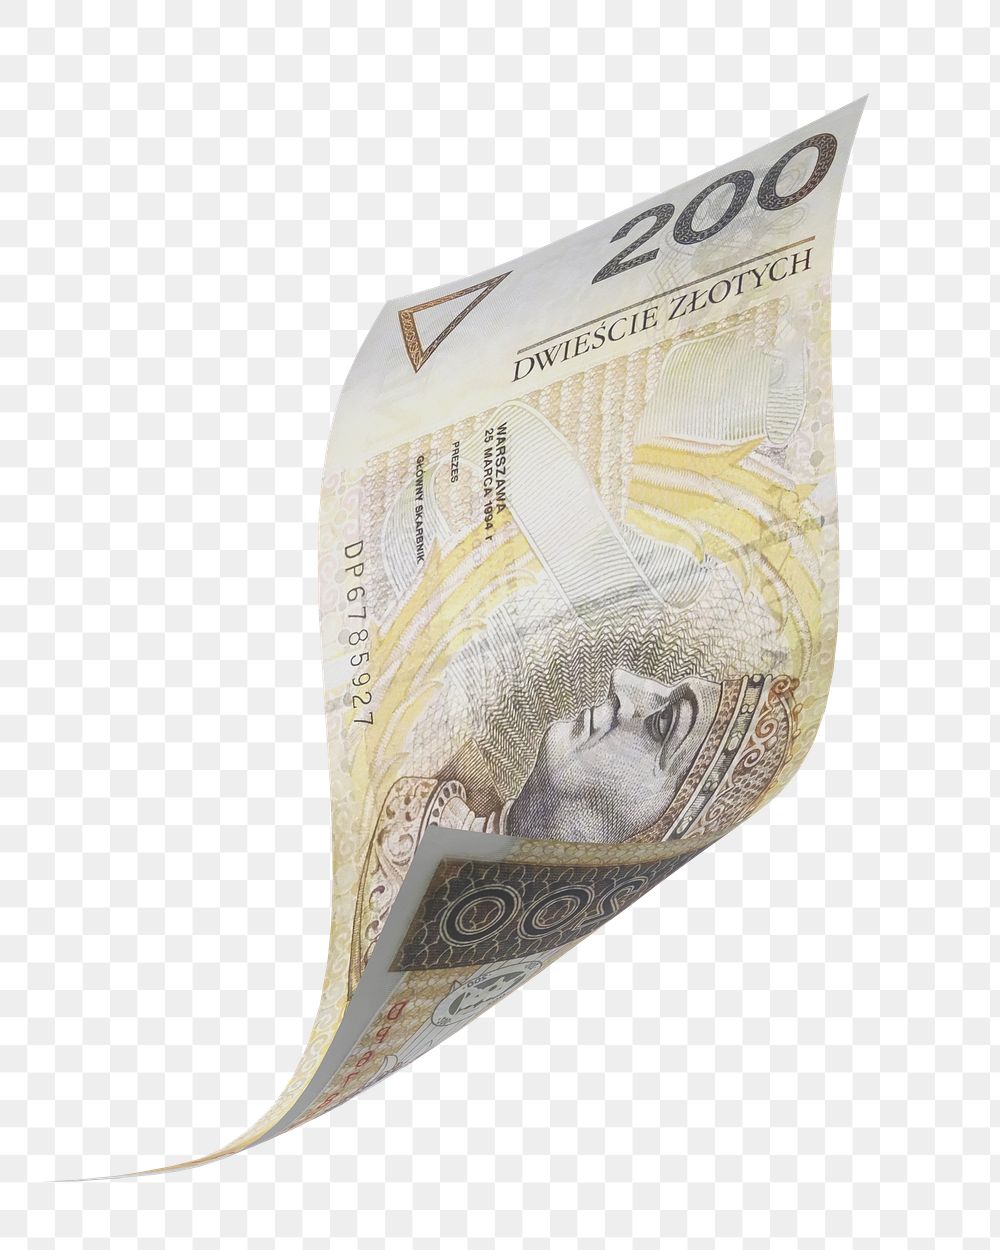 Png 200 Polish złotych bank note, transparent background